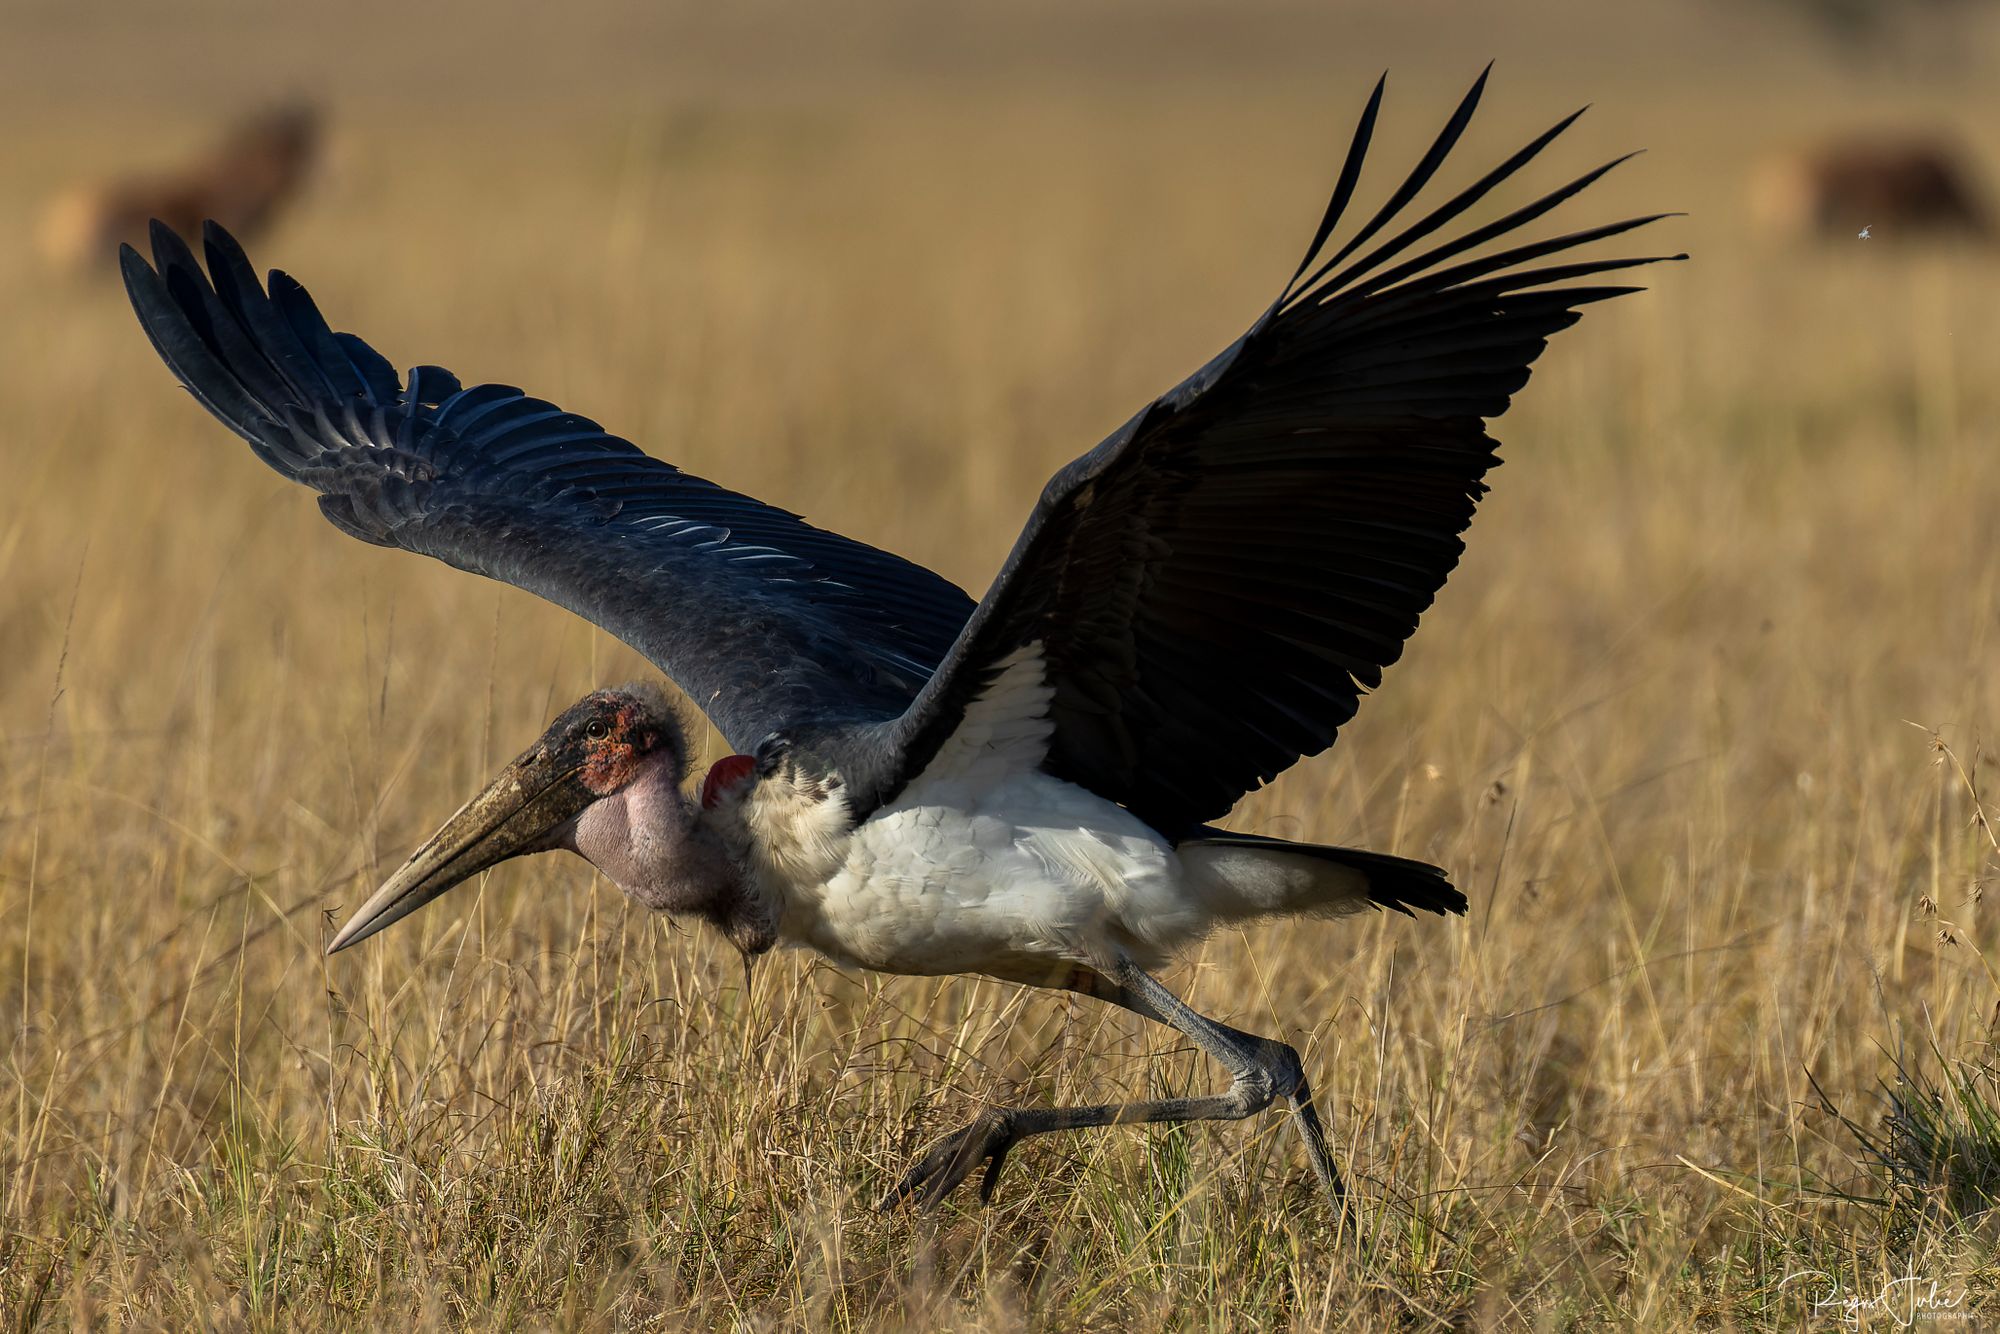 Maasai Mara : The birds